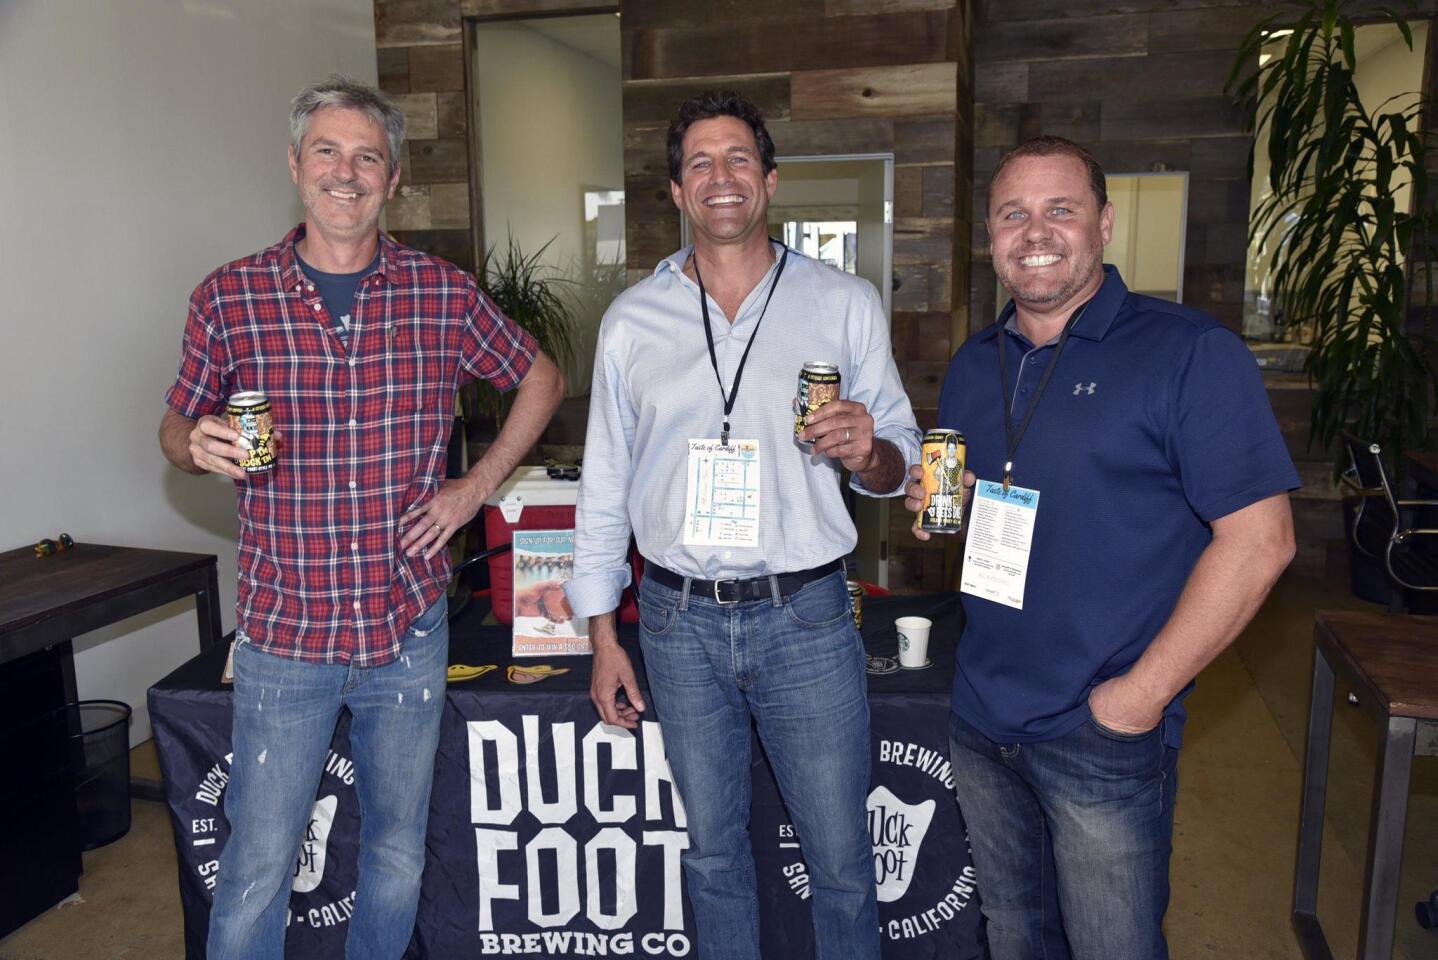 Duck Foot brewing Company owner Matt DelVecchio, sip stop host Shoreline co-owner Seth Chalnick, Shoreline salesman Dan Gross